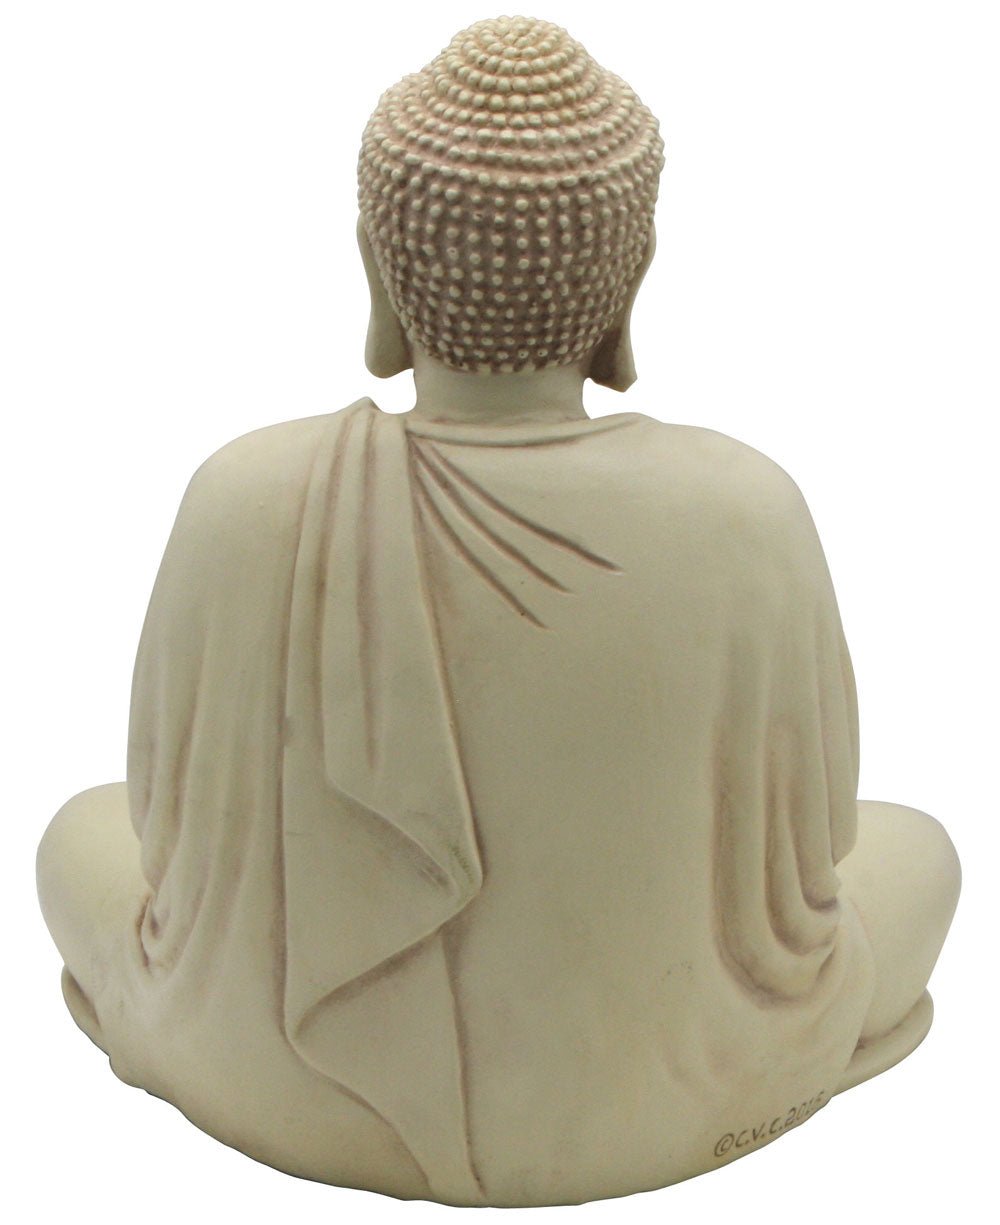 Minimalist Indoor-Outdoor Buddha Statue, 8.5 Inches - Sculptures & Statues